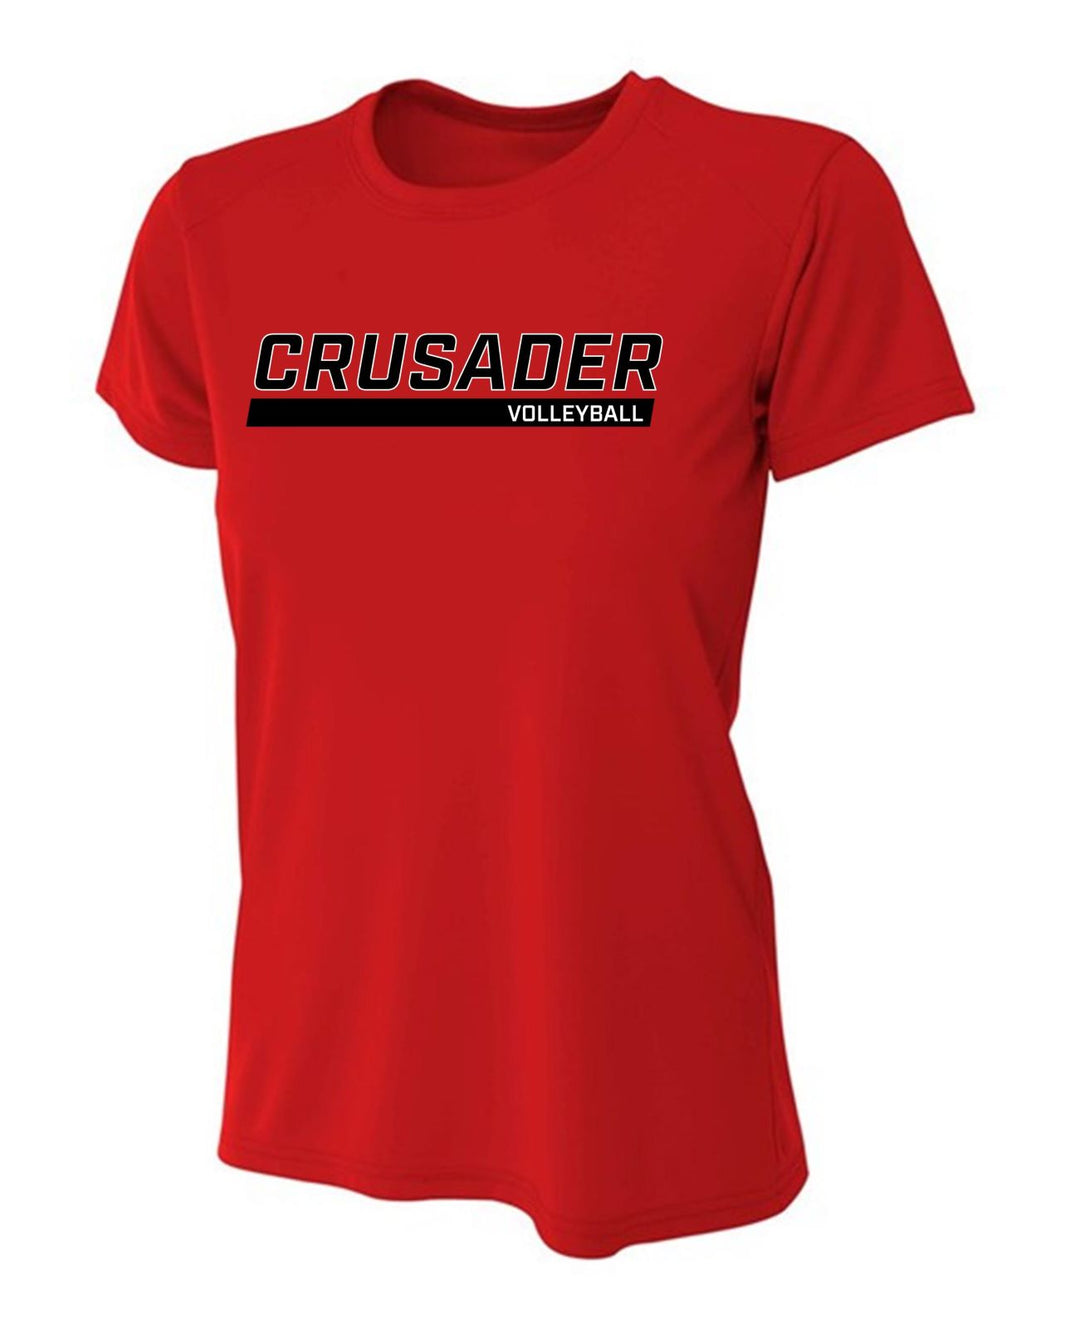 WCU Volleyball Women's Short-Sleeve Performance Shirt WCU Volleyball Red CRUSADER - Third Coast Soccer